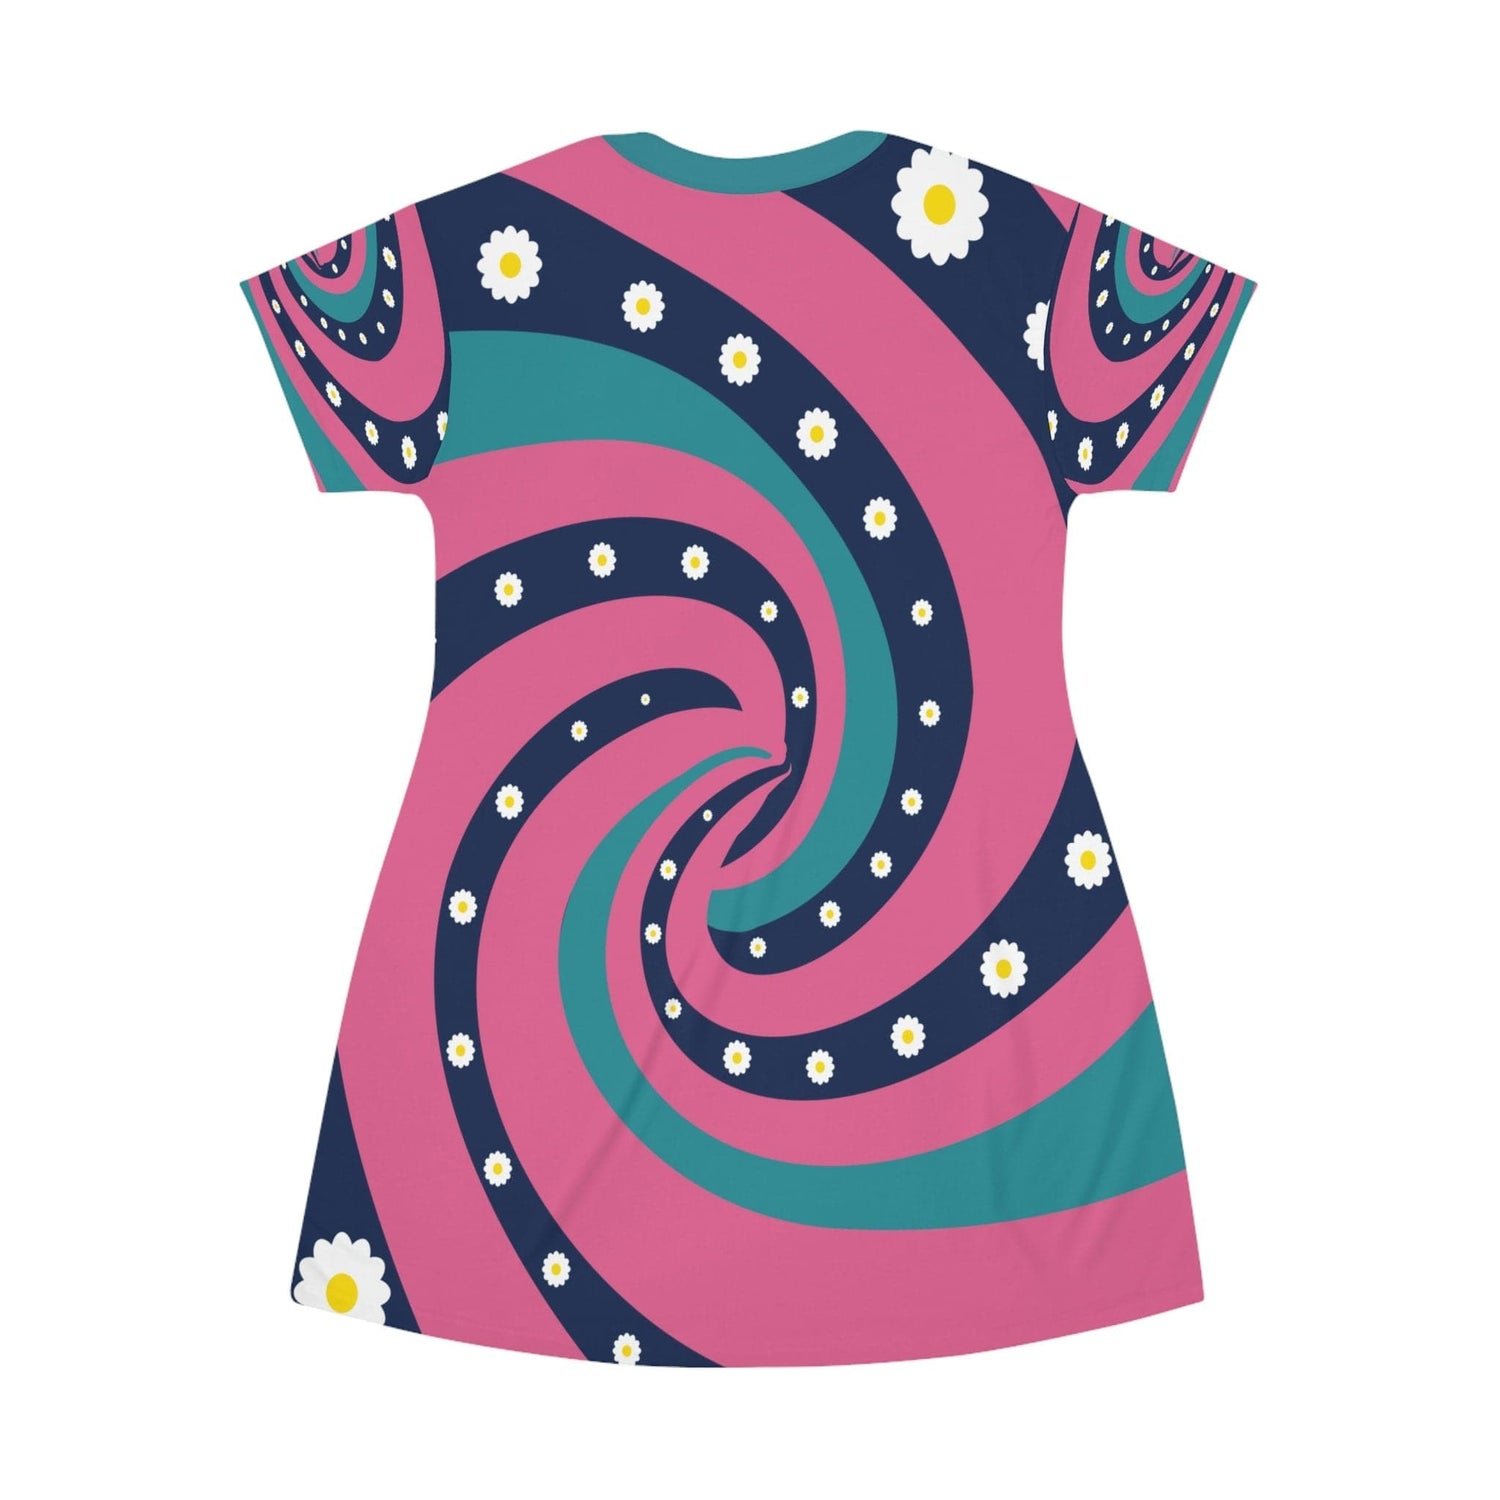 Kate McEnroe New York Retro 70s Psychedelic Groovy Swirl Flower Power Tshirt Dress in Mid Century Modern Teal Blue, Pink, Navy, MCM Summer Party Dress, Beach Wear Dresses M 24809219195907777729